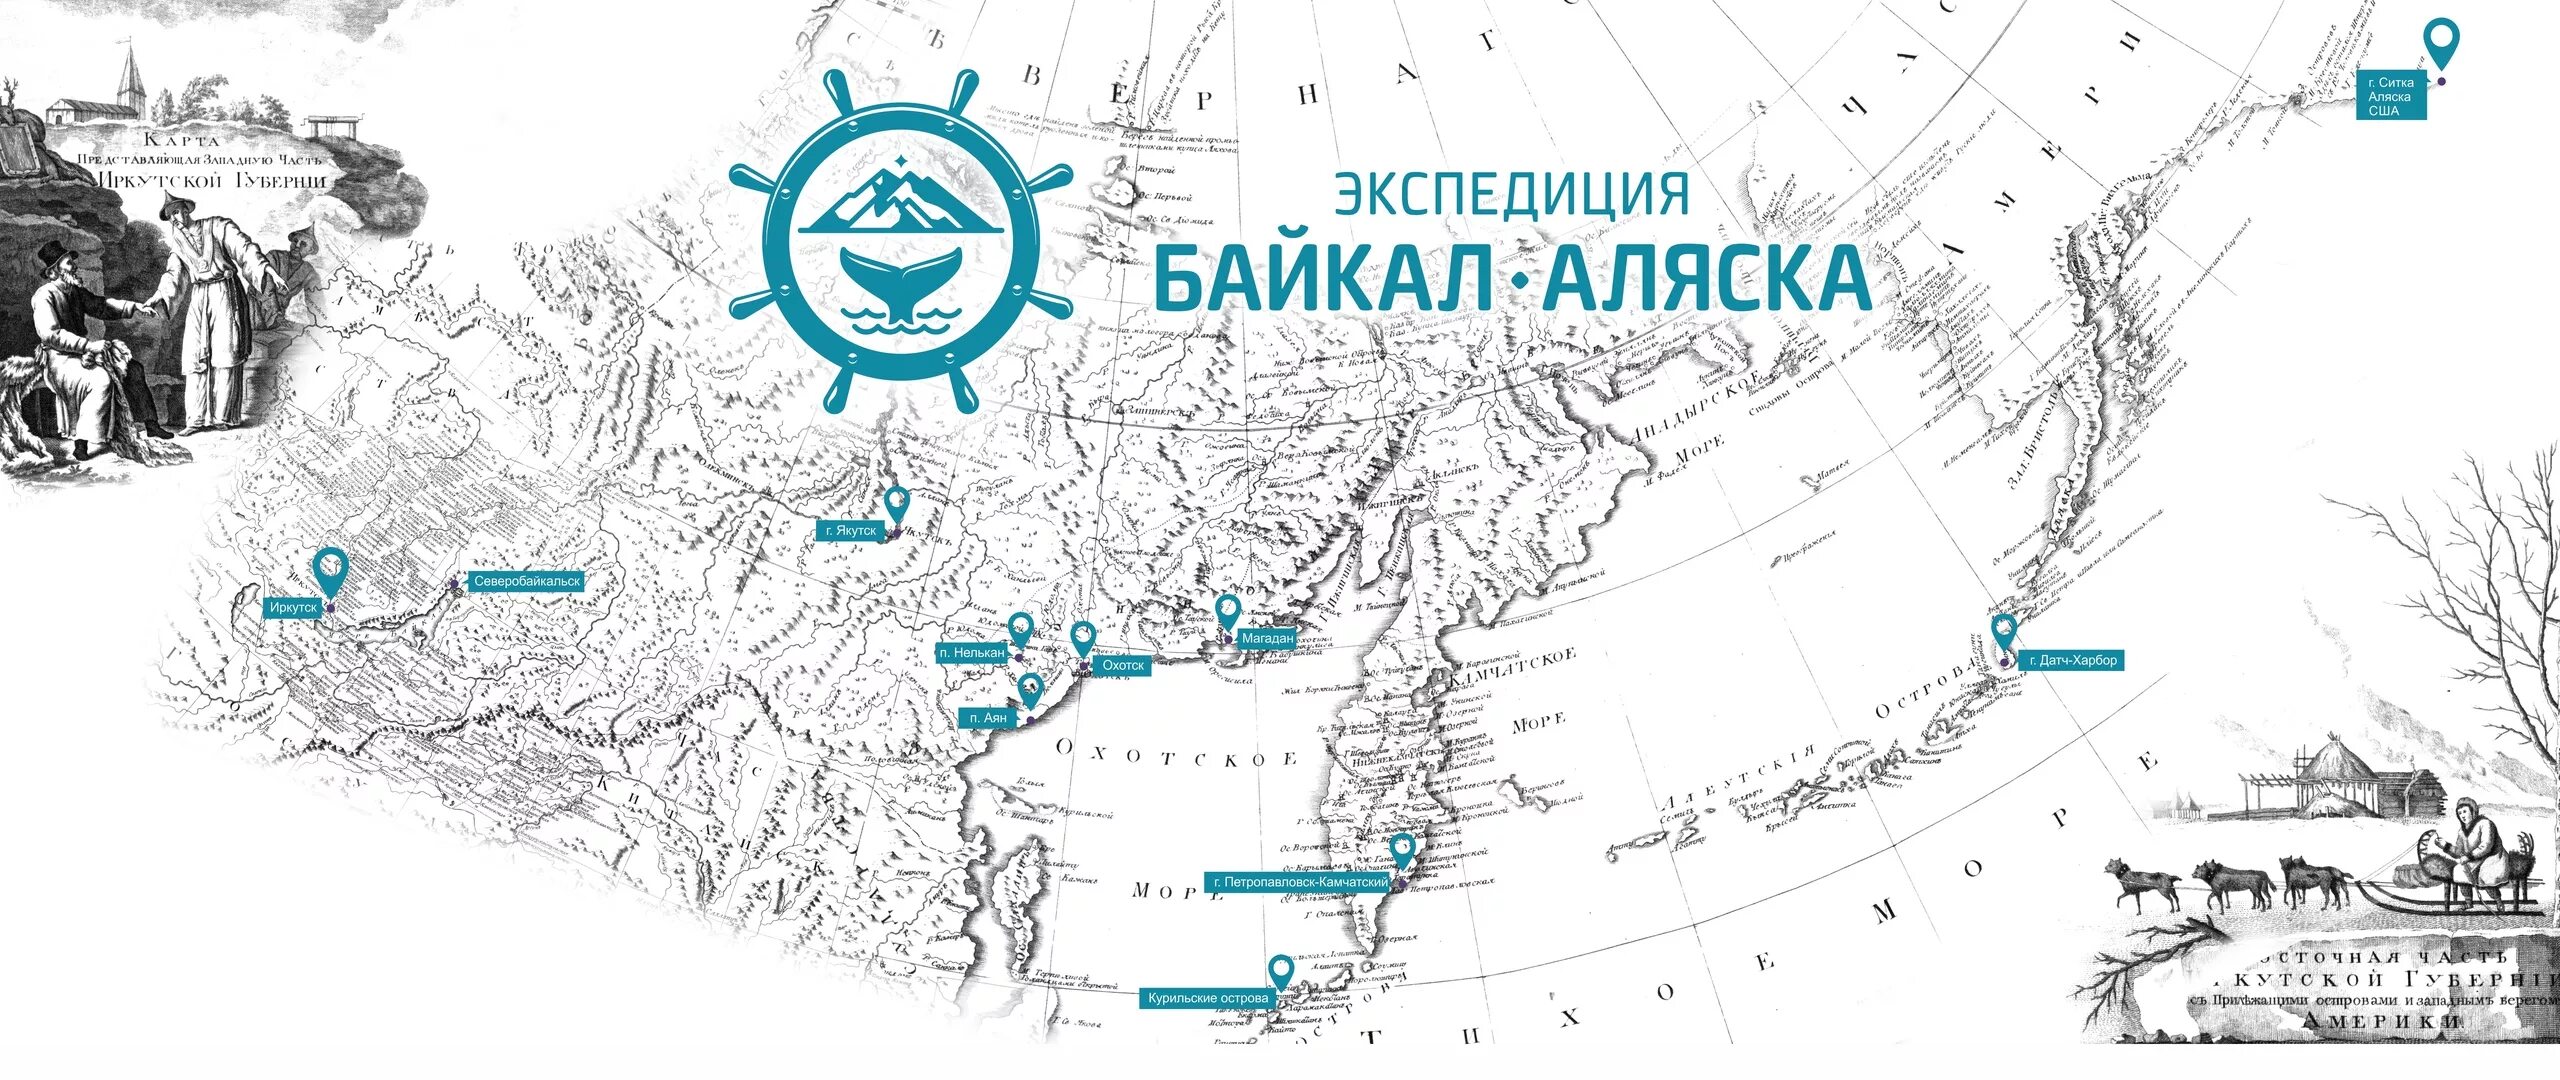 Аудиокнига аляски. Байкал Аляска Экспедиция. Байкал Аляска путь. Аляска на карте. Байкал Аляска карта.